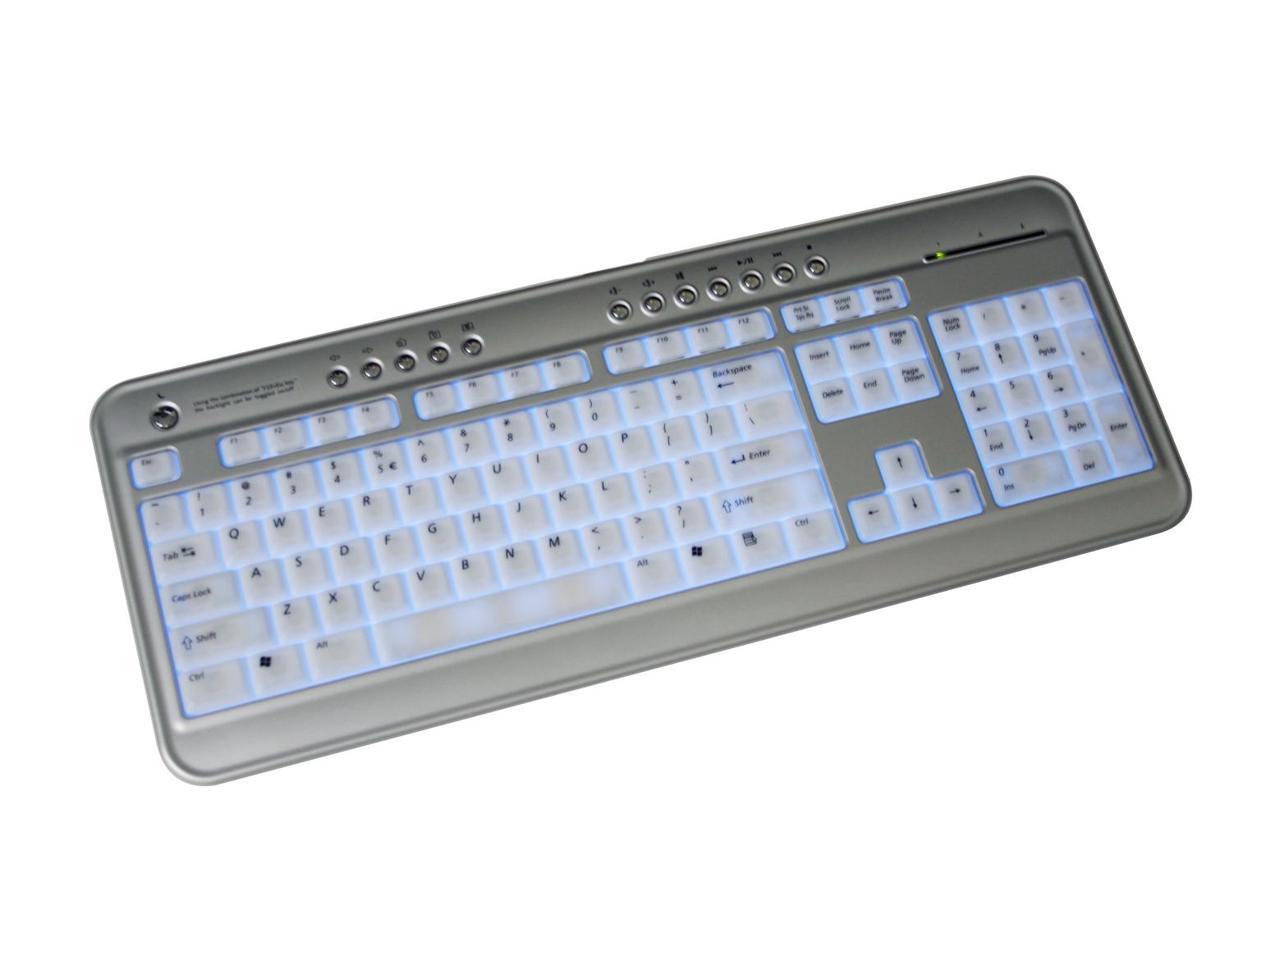 btc 6300cl keyboard